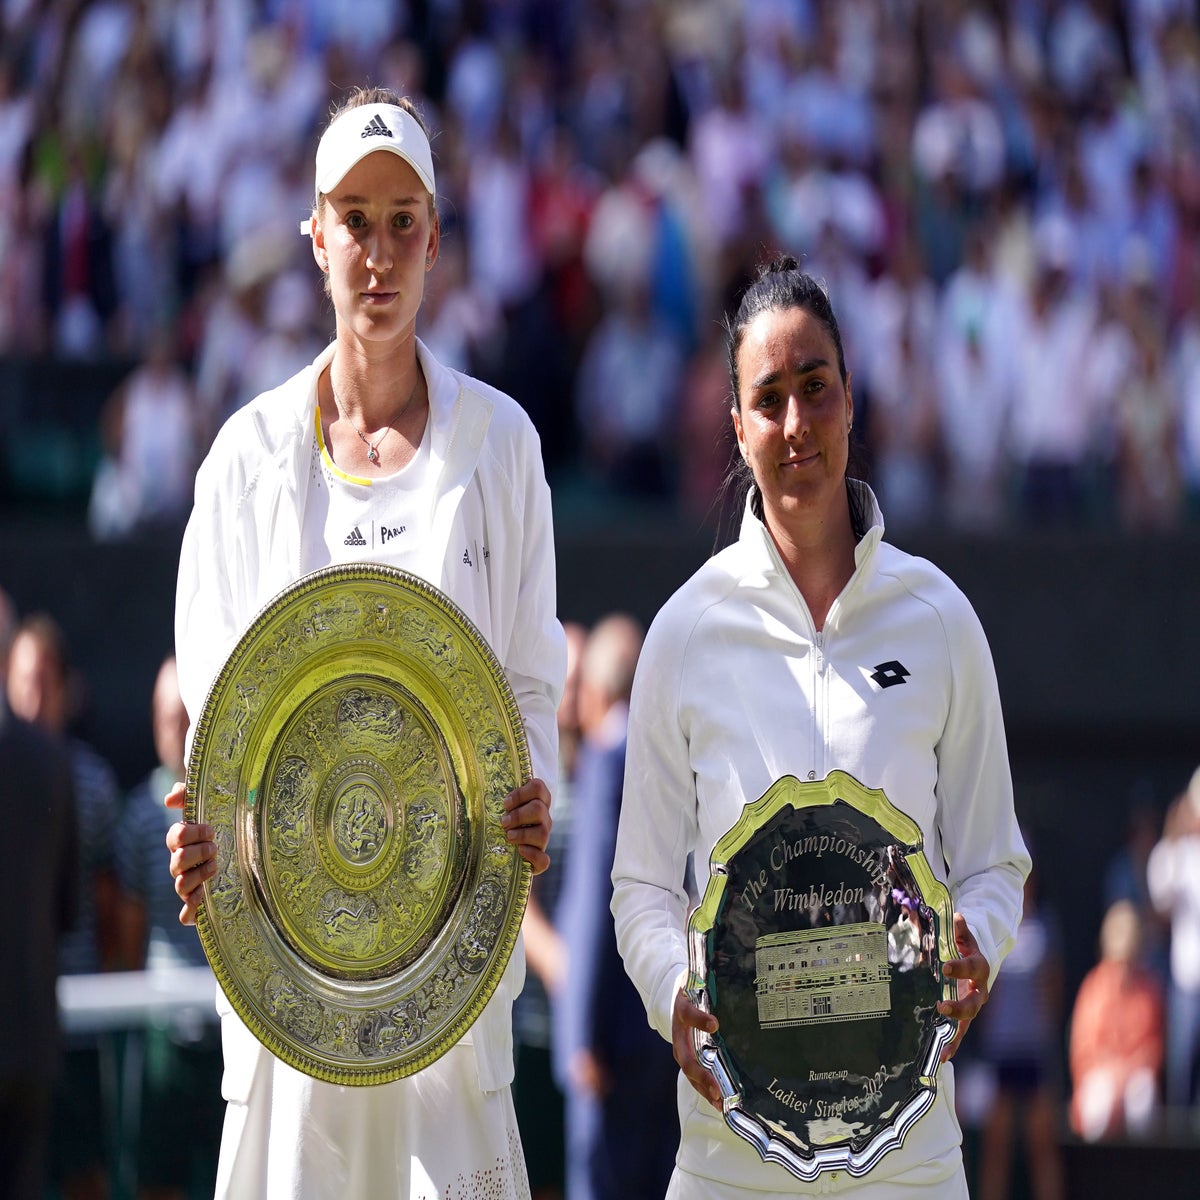 Rybakina battles back against Jabeur to win Wimbledon title